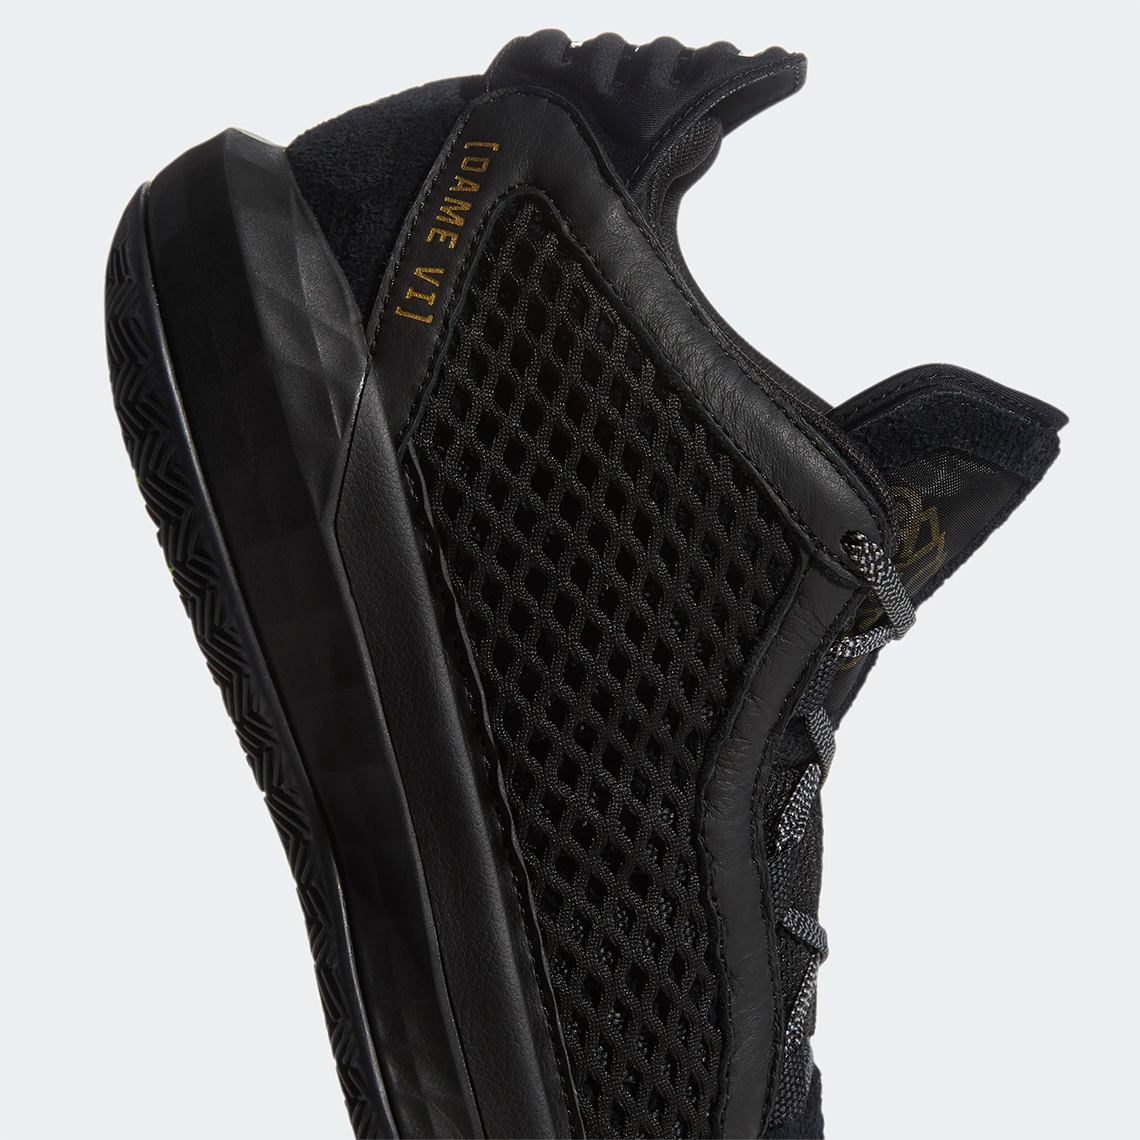 Adidas Dame 6 Core Black Fv8627 9